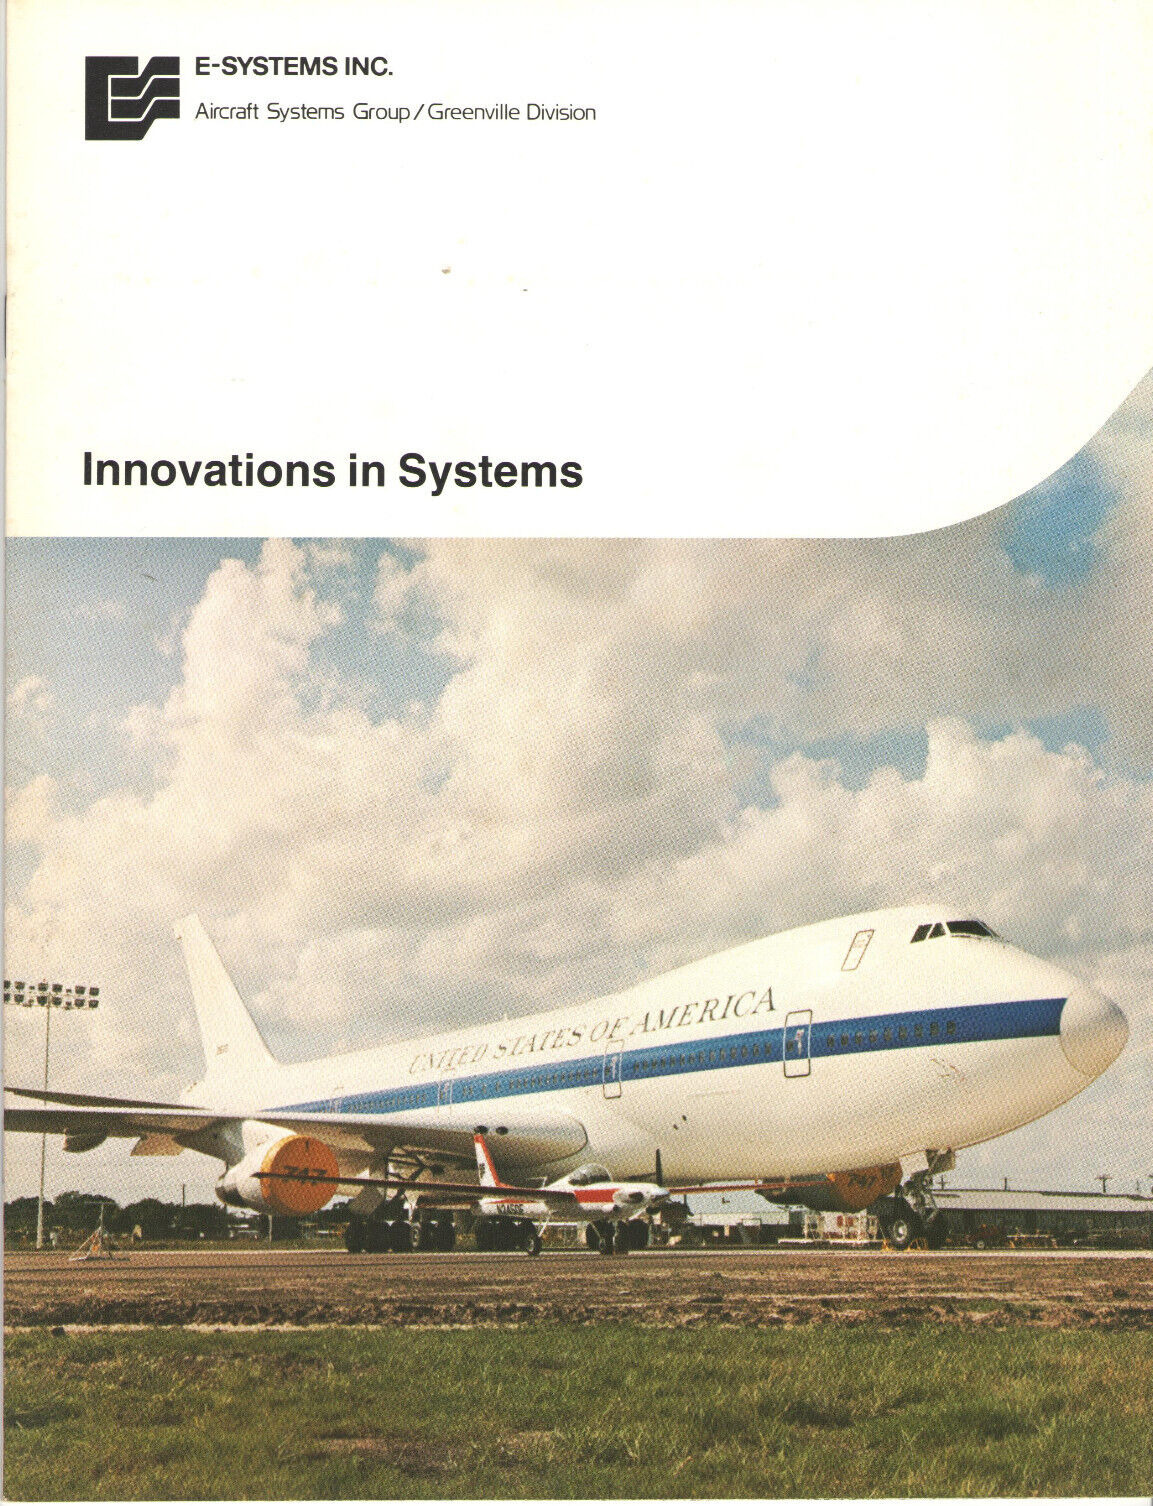 VTG 1970s BOEING 747 E-4A E-SYSTEMS BROCHURE PRESIDENT'S EMERGENCY COMMAND POST